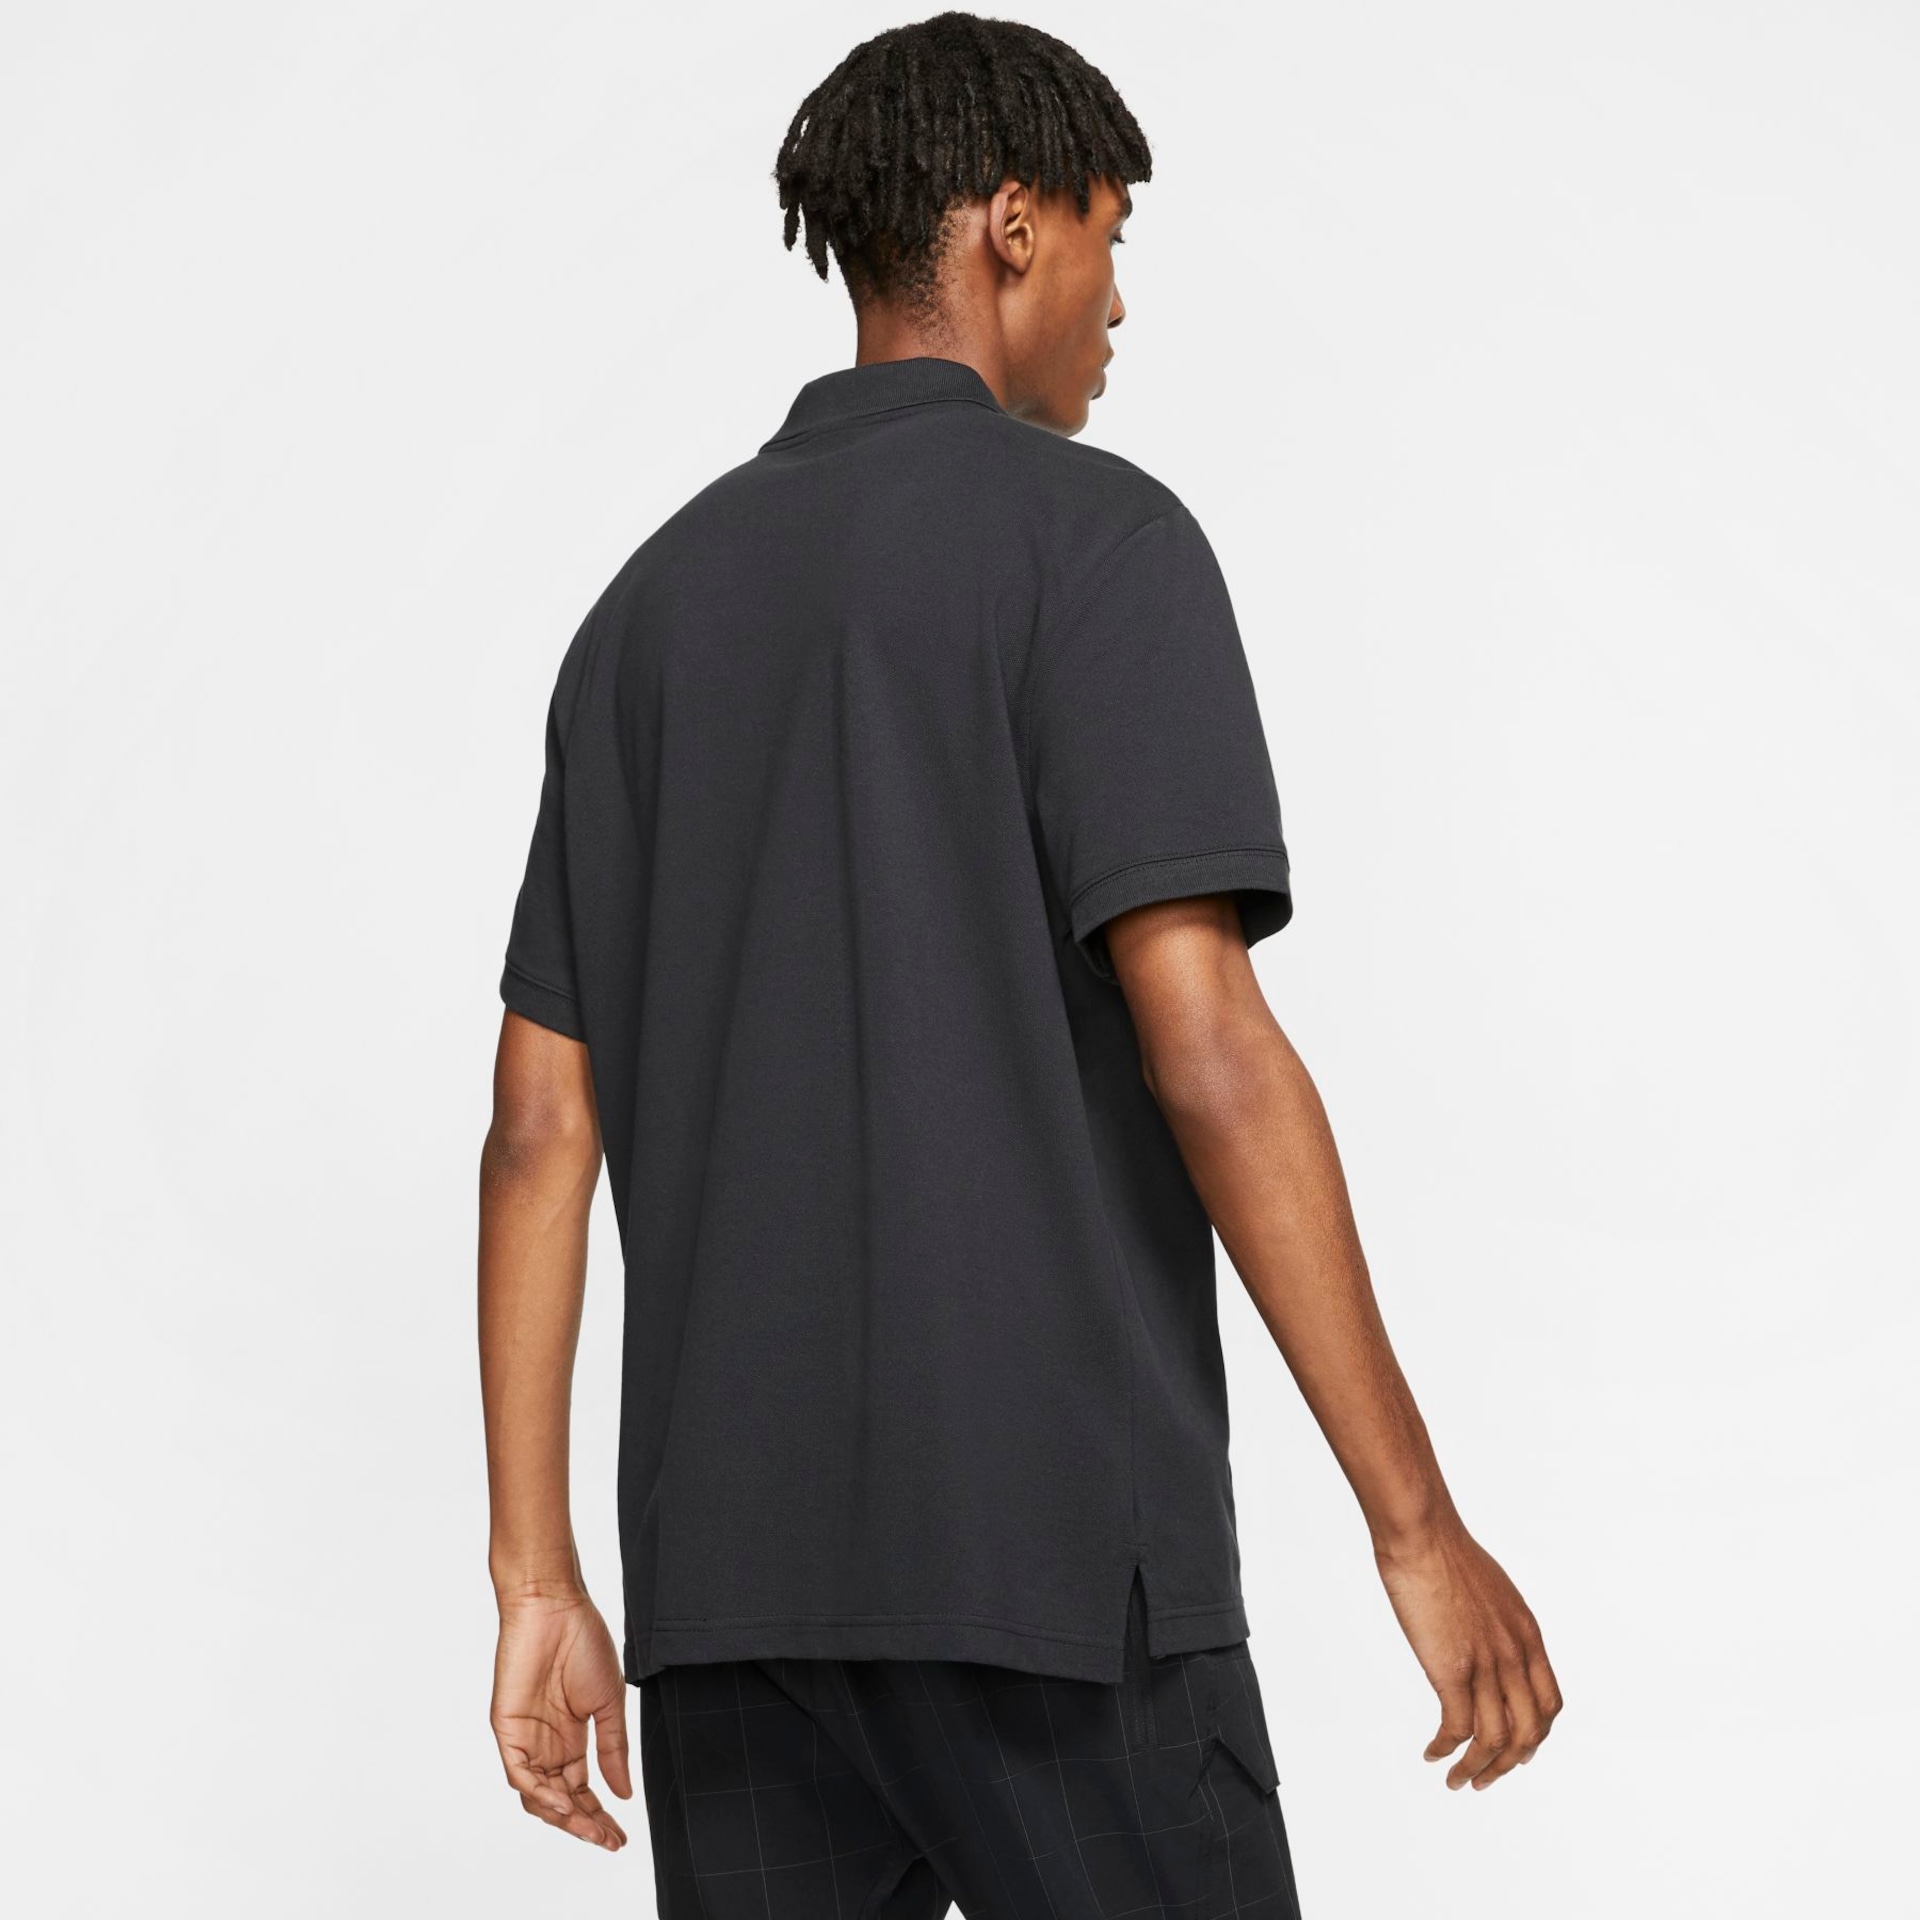 Camiseta Nike Sportswear Polo Masculina - Foto 2